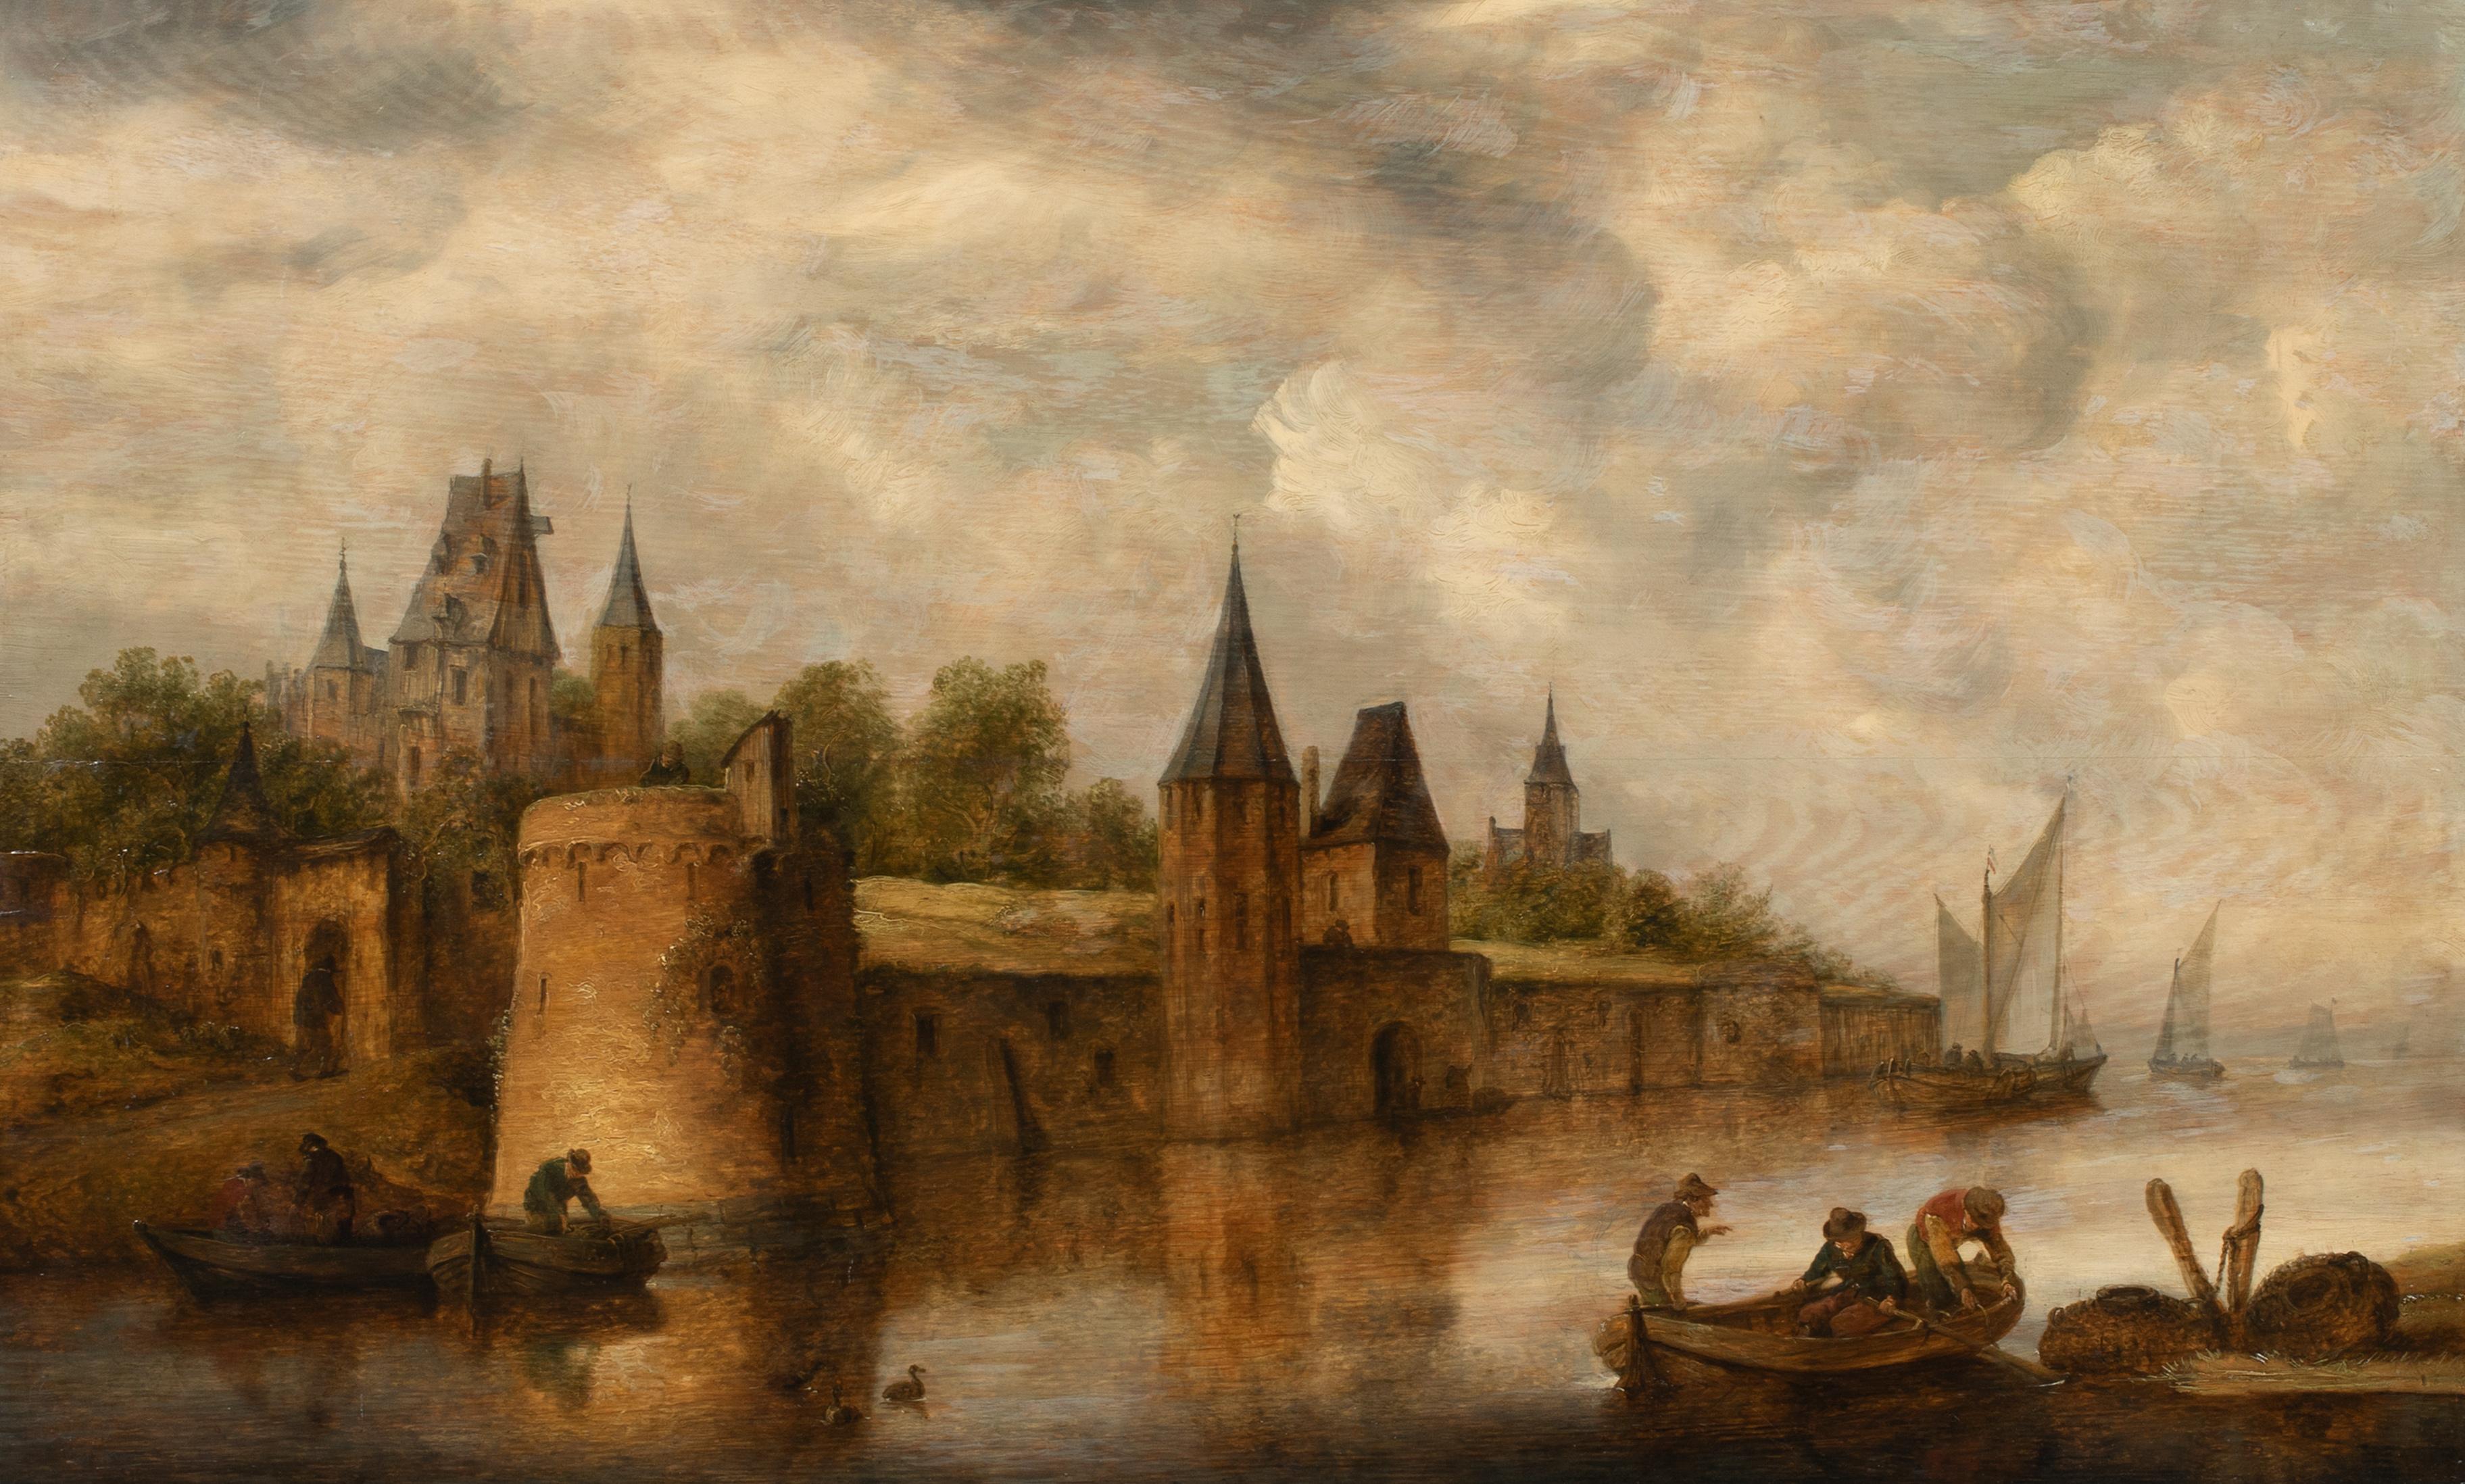 River Landscape With Figures In Boats, 17th Century  - Painting by Jan Josefsz Van Goyen